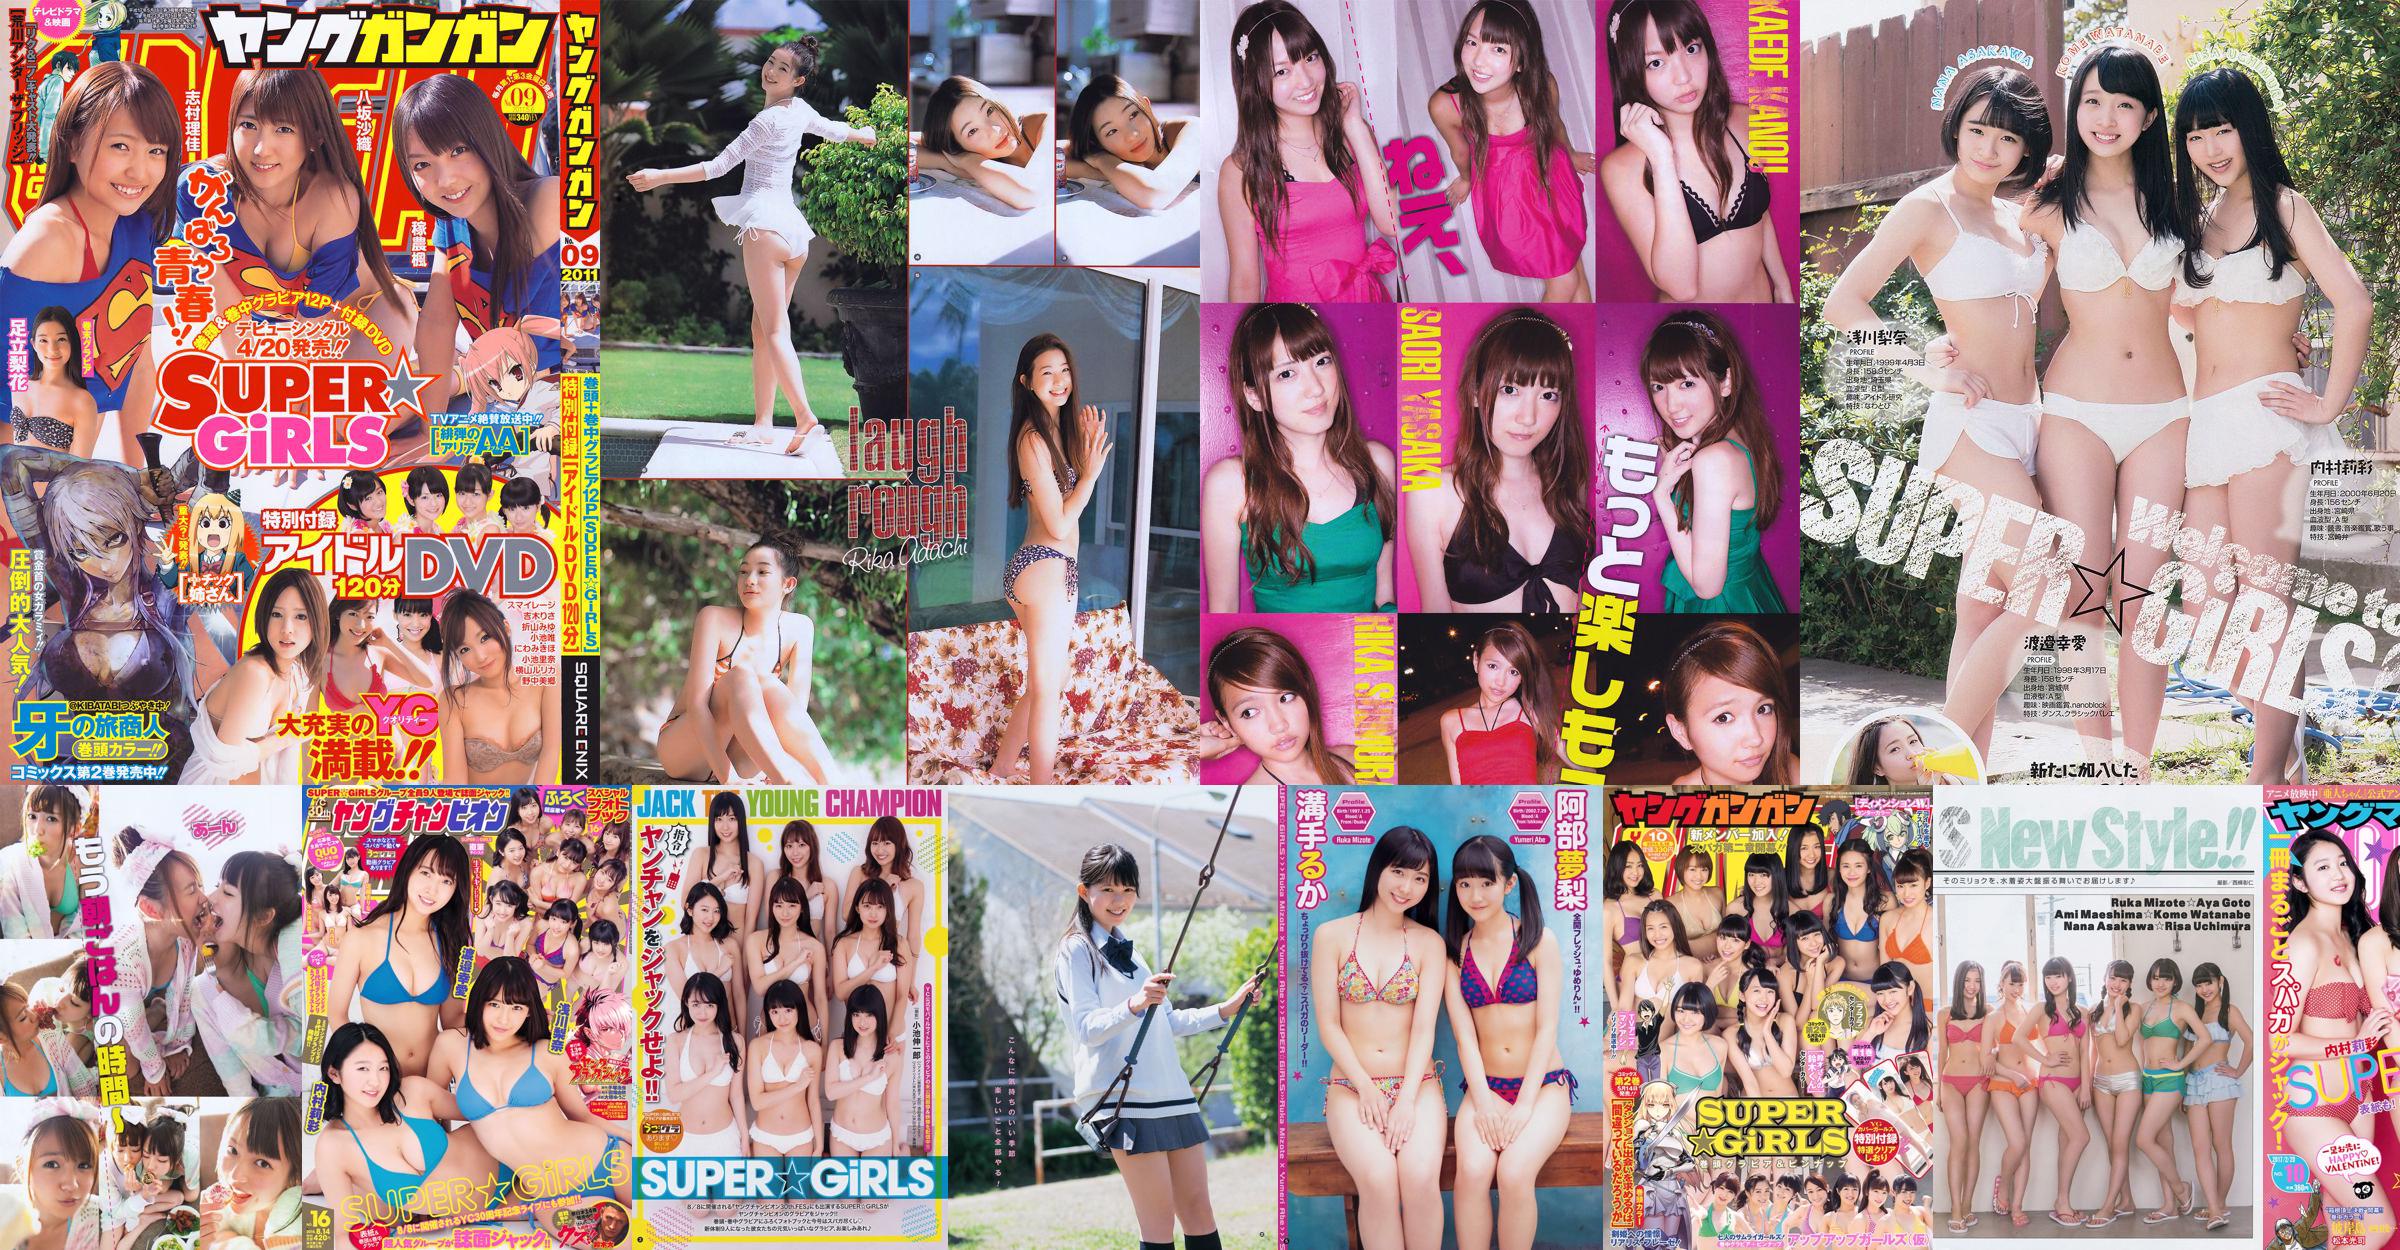 [Young Gangan] SUPER ☆ GiRLS Up Up Girls (Kakko) Ami Yokoyama 2014 No.10 Fotografia No.a74654 Página 4